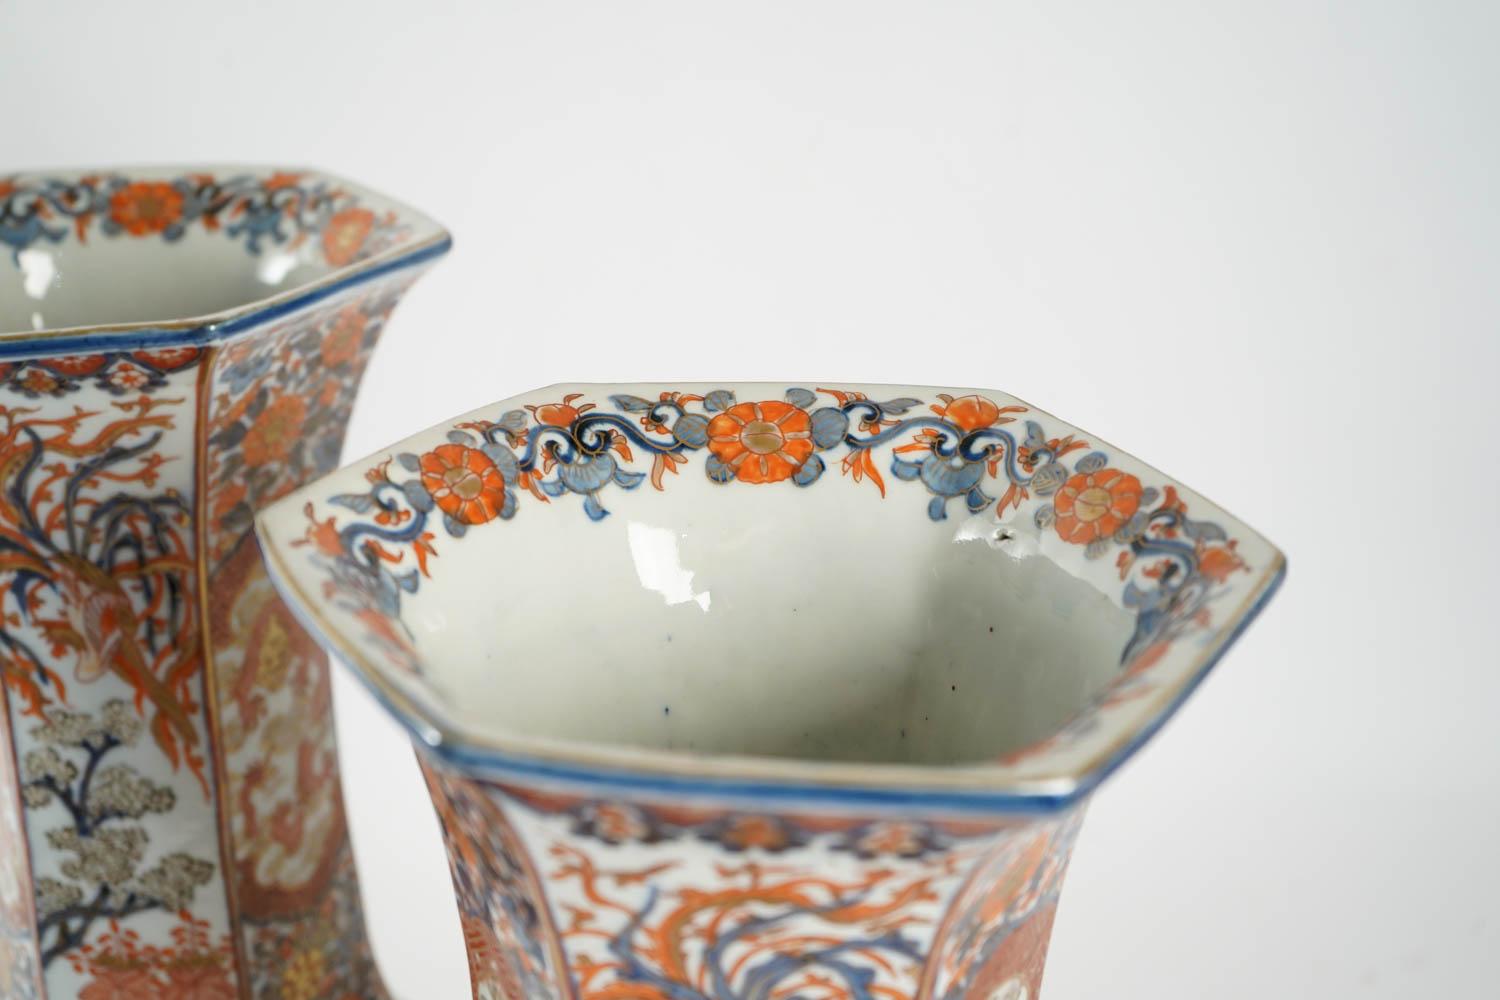 Rare Pair of Imari Porcelain Vases with Polychrome Decor, Japan, 19th Century 2